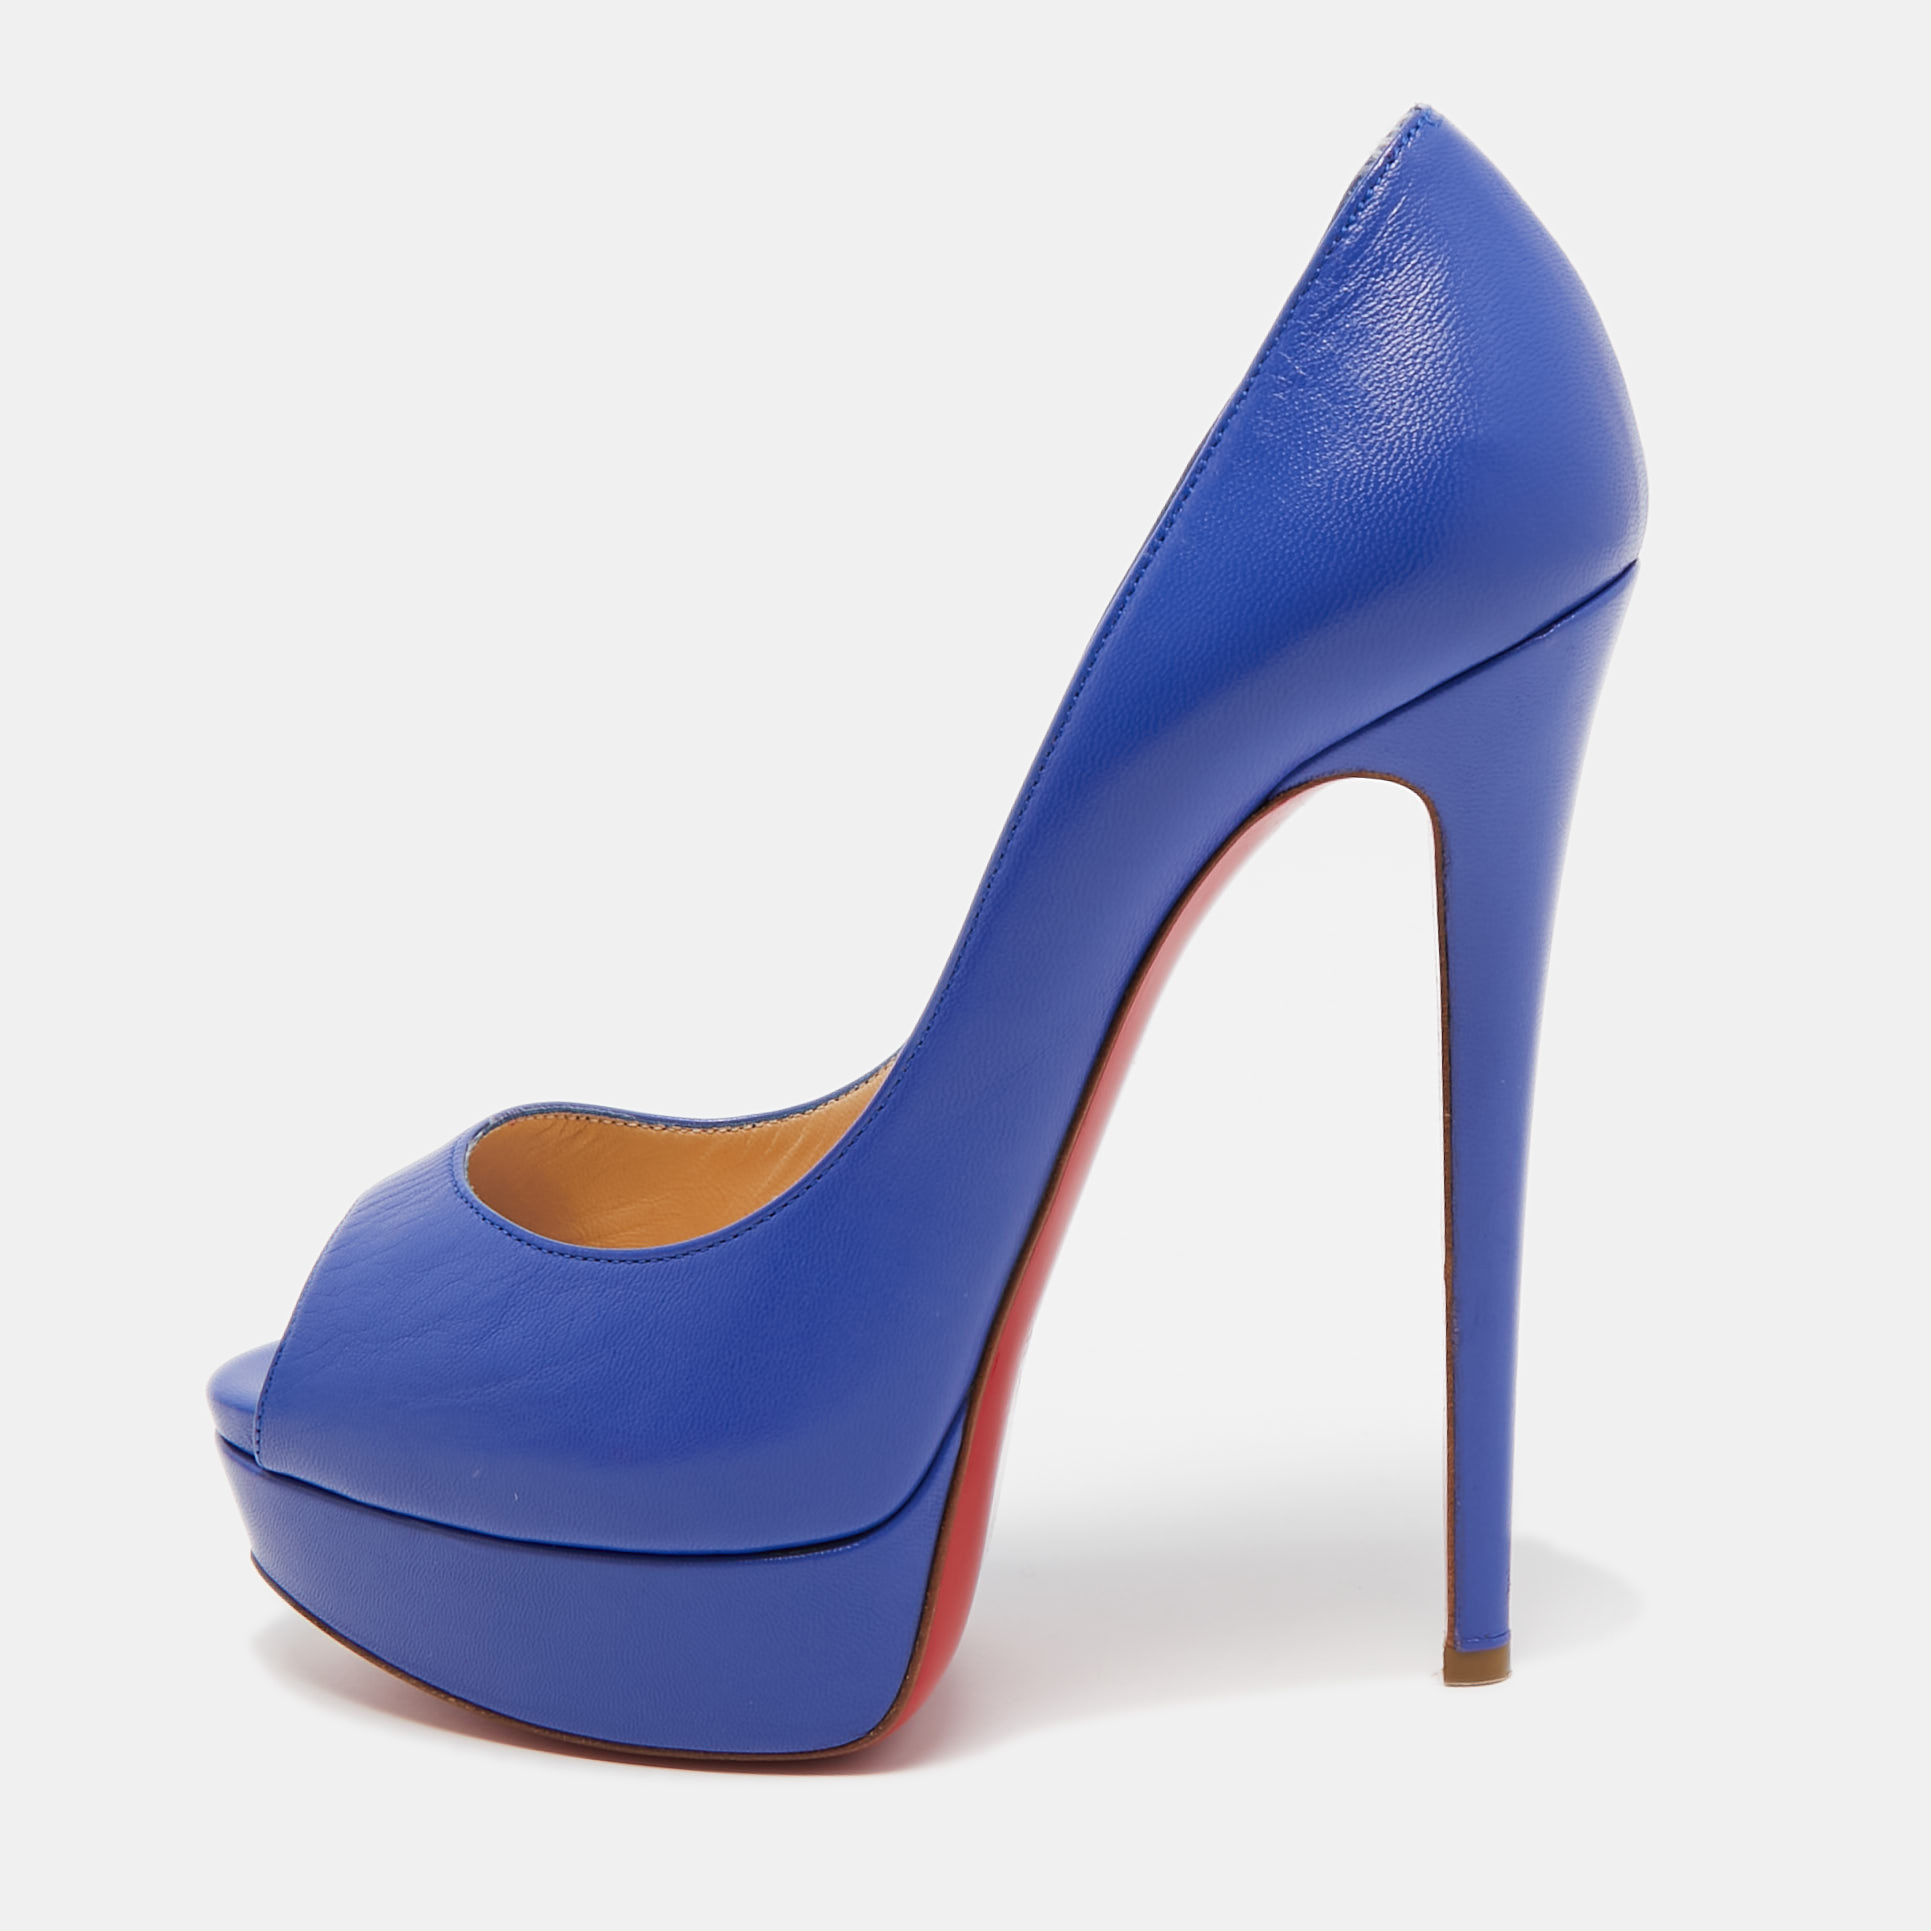 Christian louboutin blue leather lady peep toe platform pumps size 37